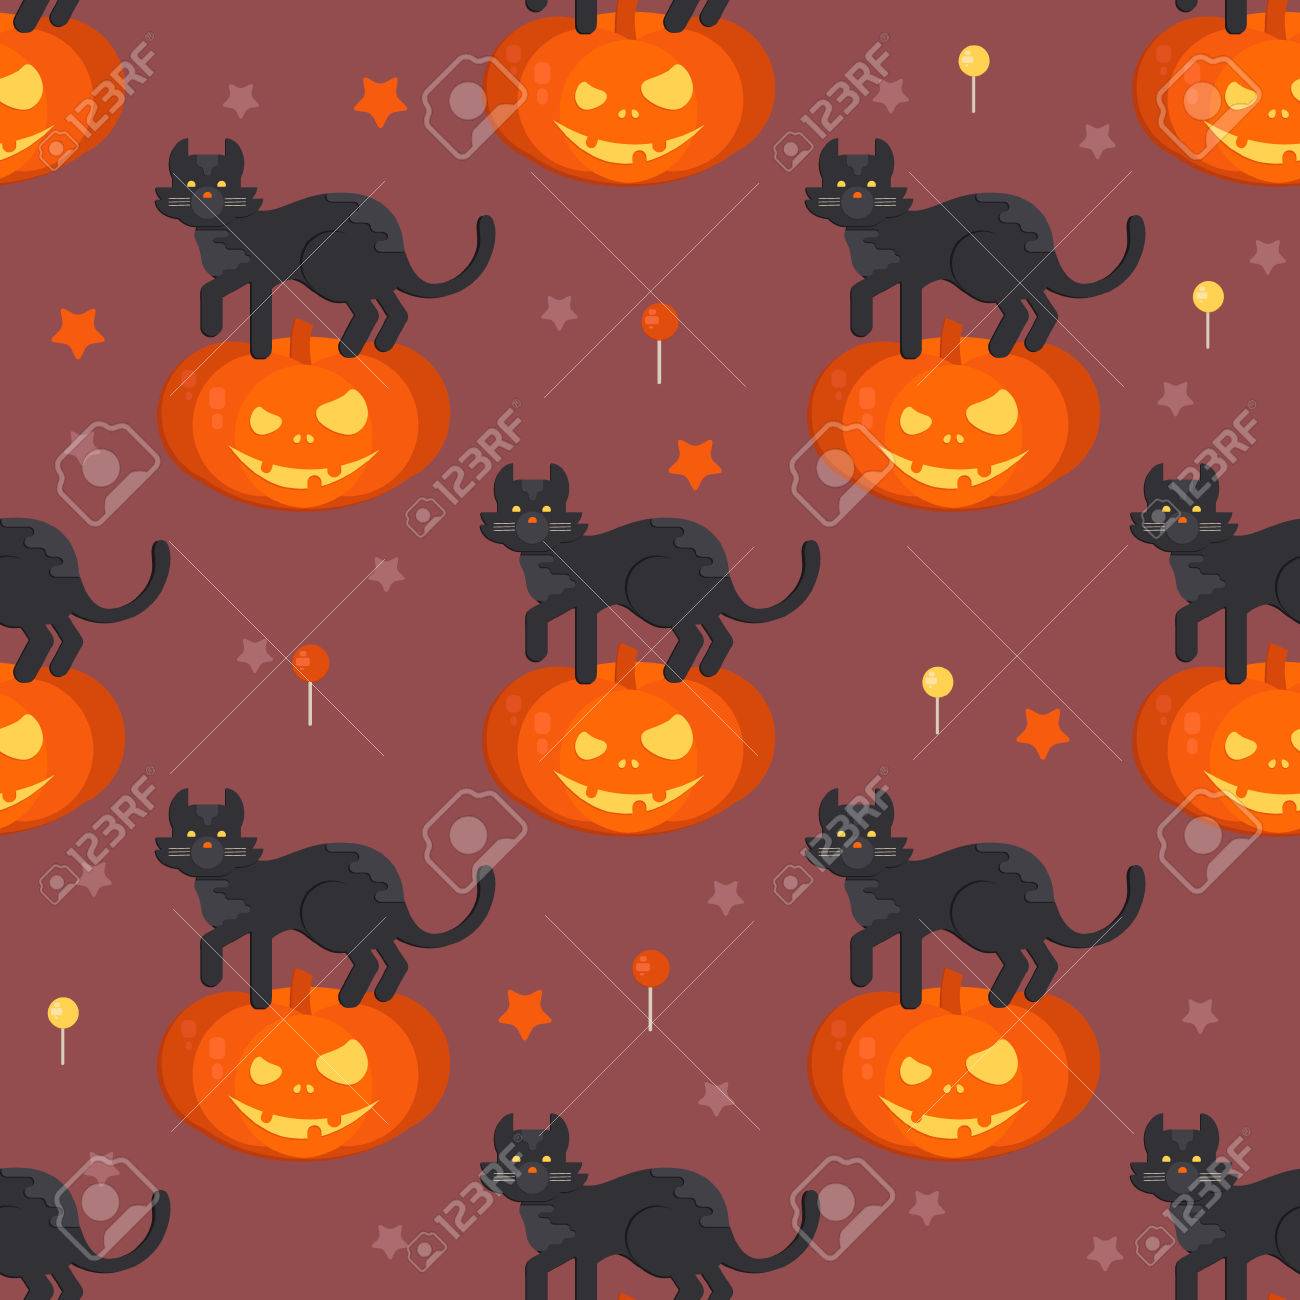 Halloween Pumpkin Head With Black Cat Seamless Pattern